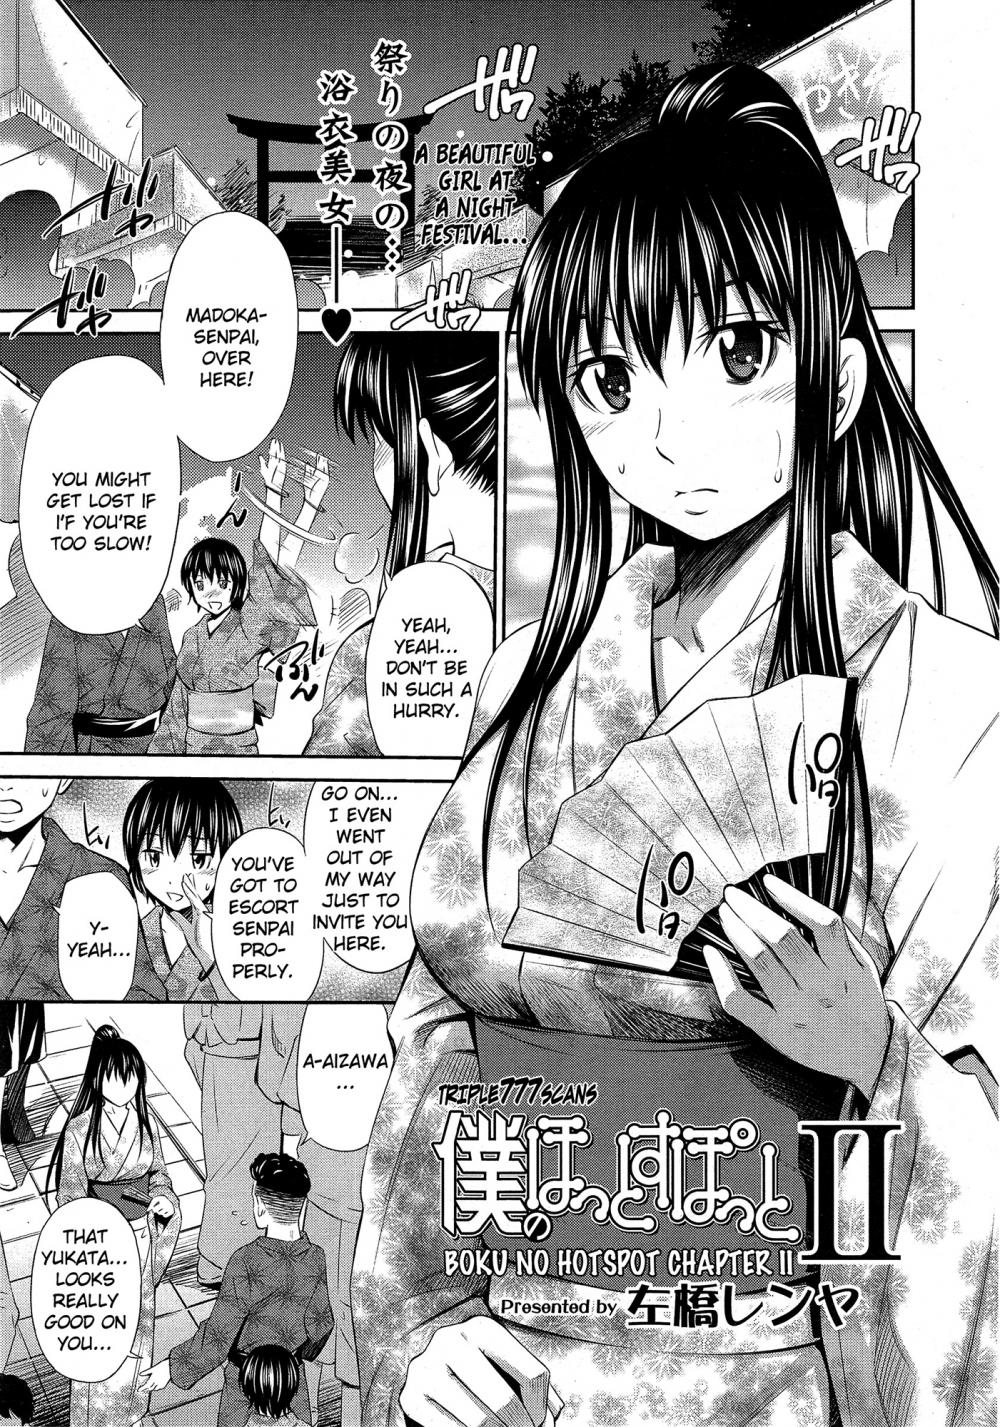 Hentai Manga Comic-My Hot Spot-Chapter 2-1